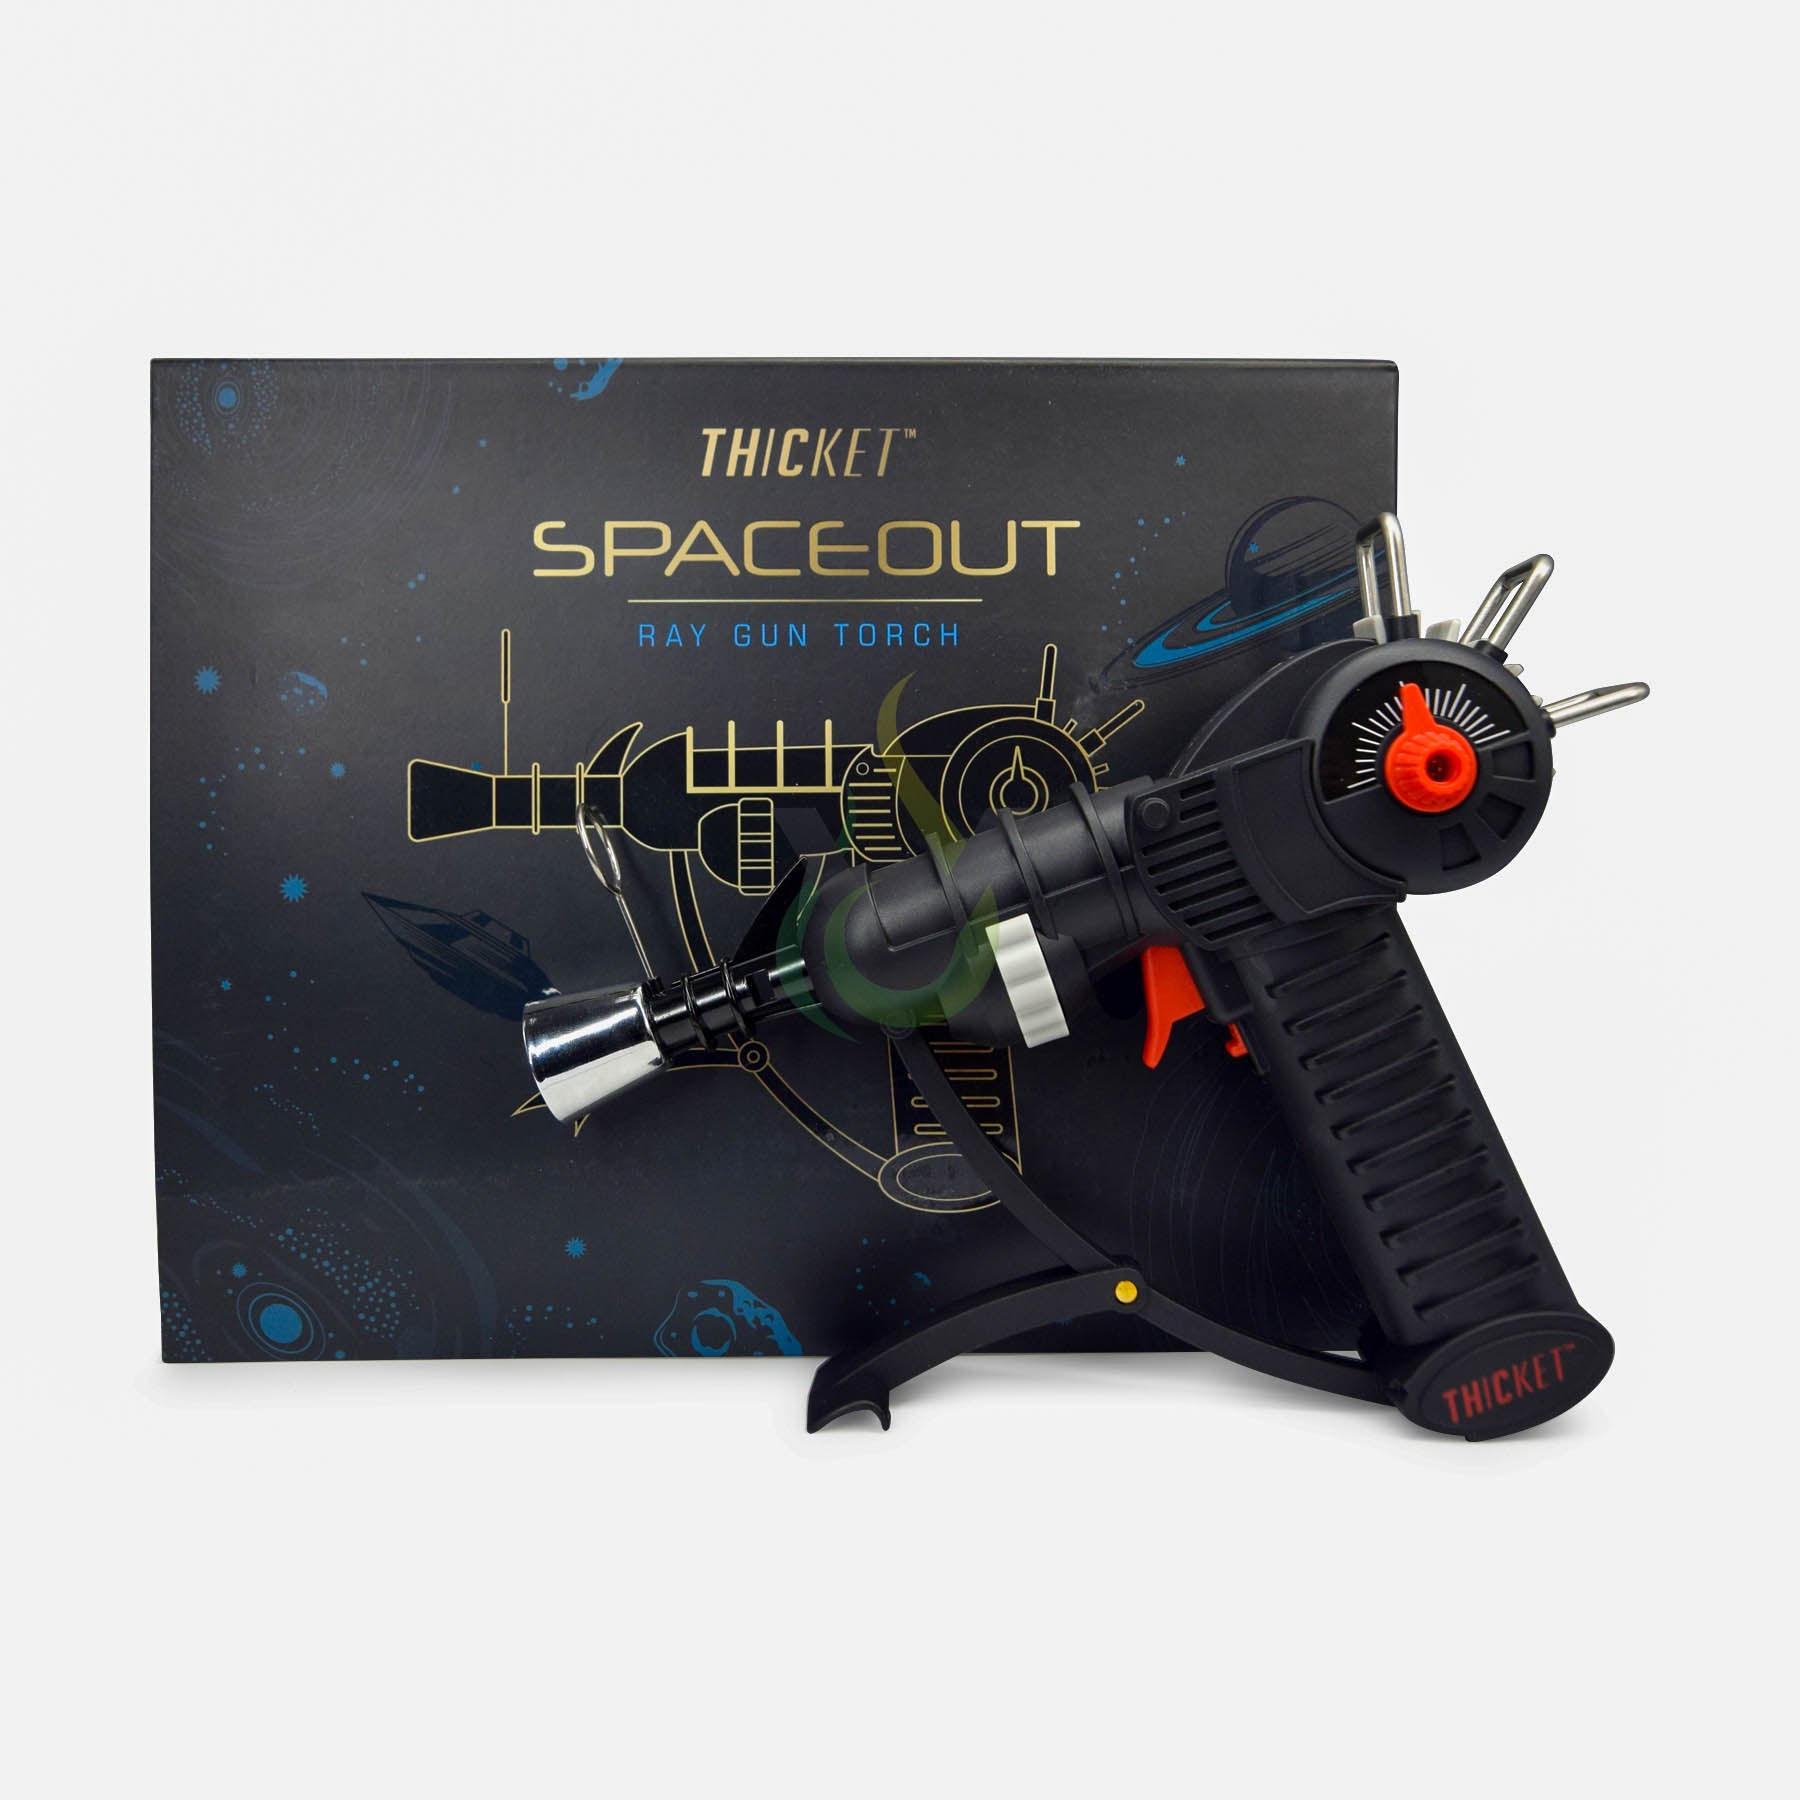 Spaceout Ray Gun Torch